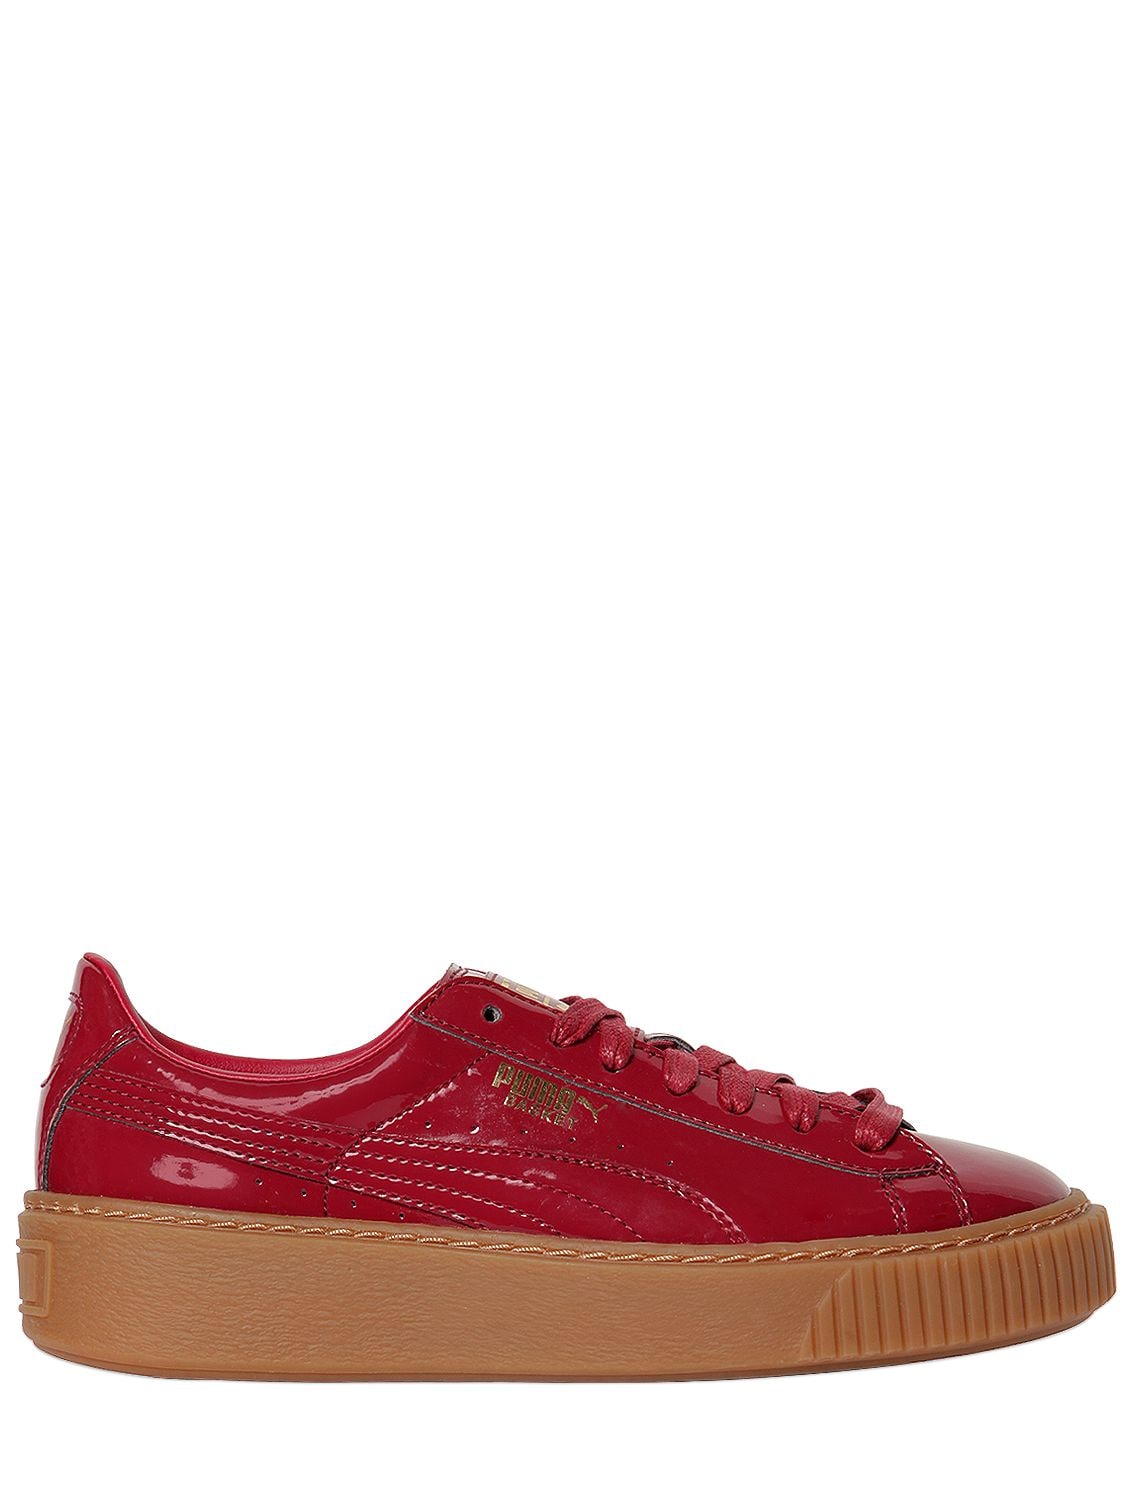 Puma Basket Platform Patent Sneakers In Red